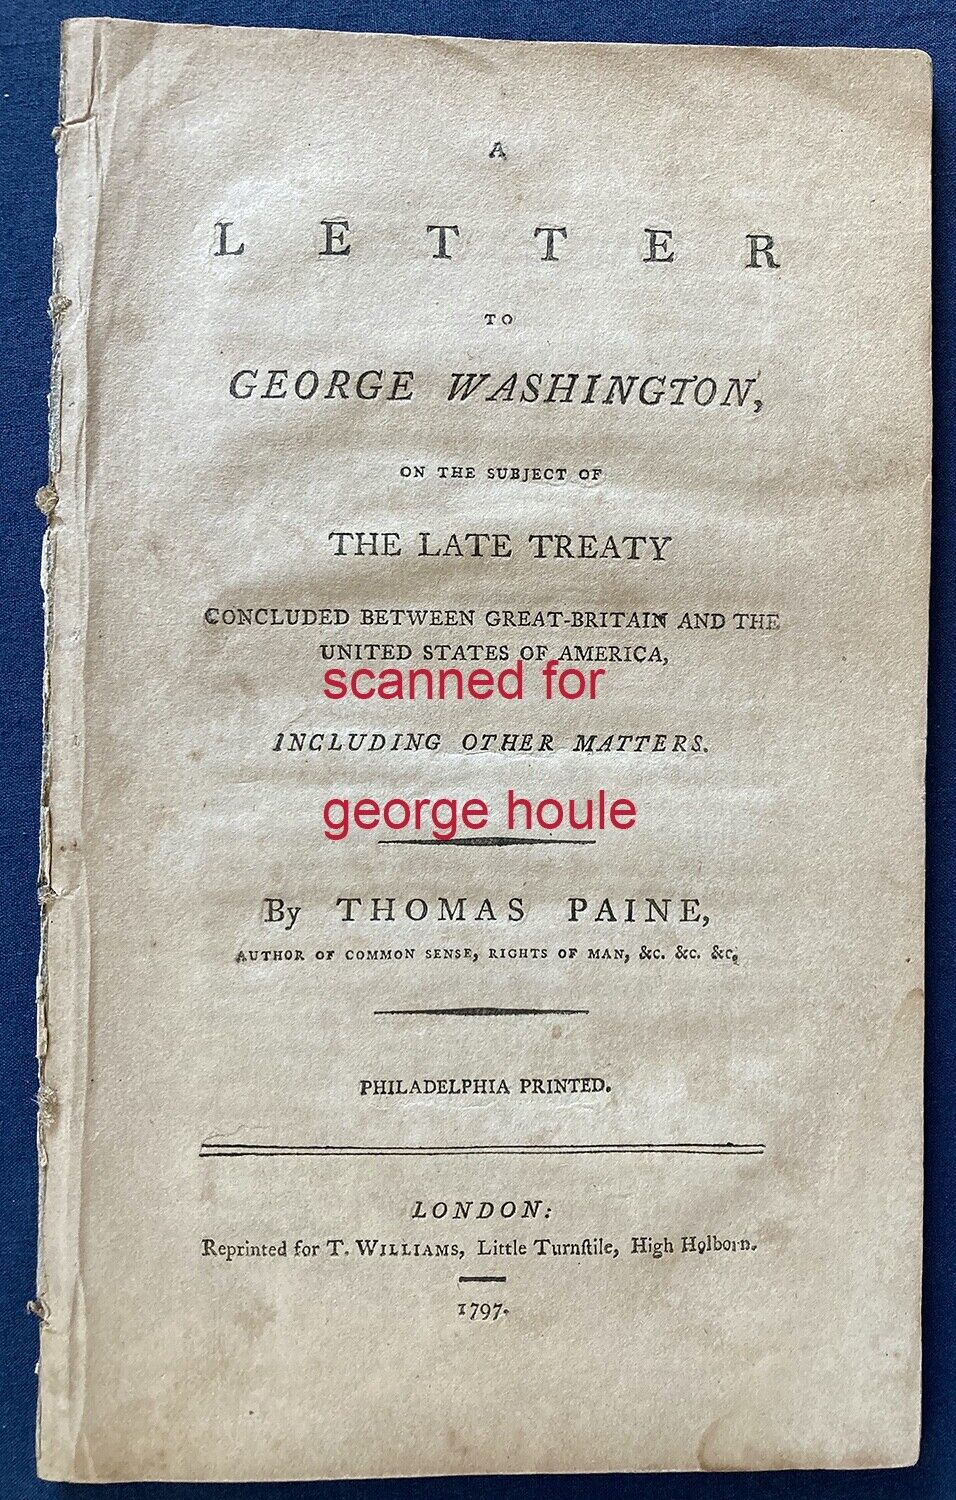 THOMAS PAINE - LETTER - 1797 - 1ST EDITION, LONDON - TREATY - GEORGE WASHINGTON